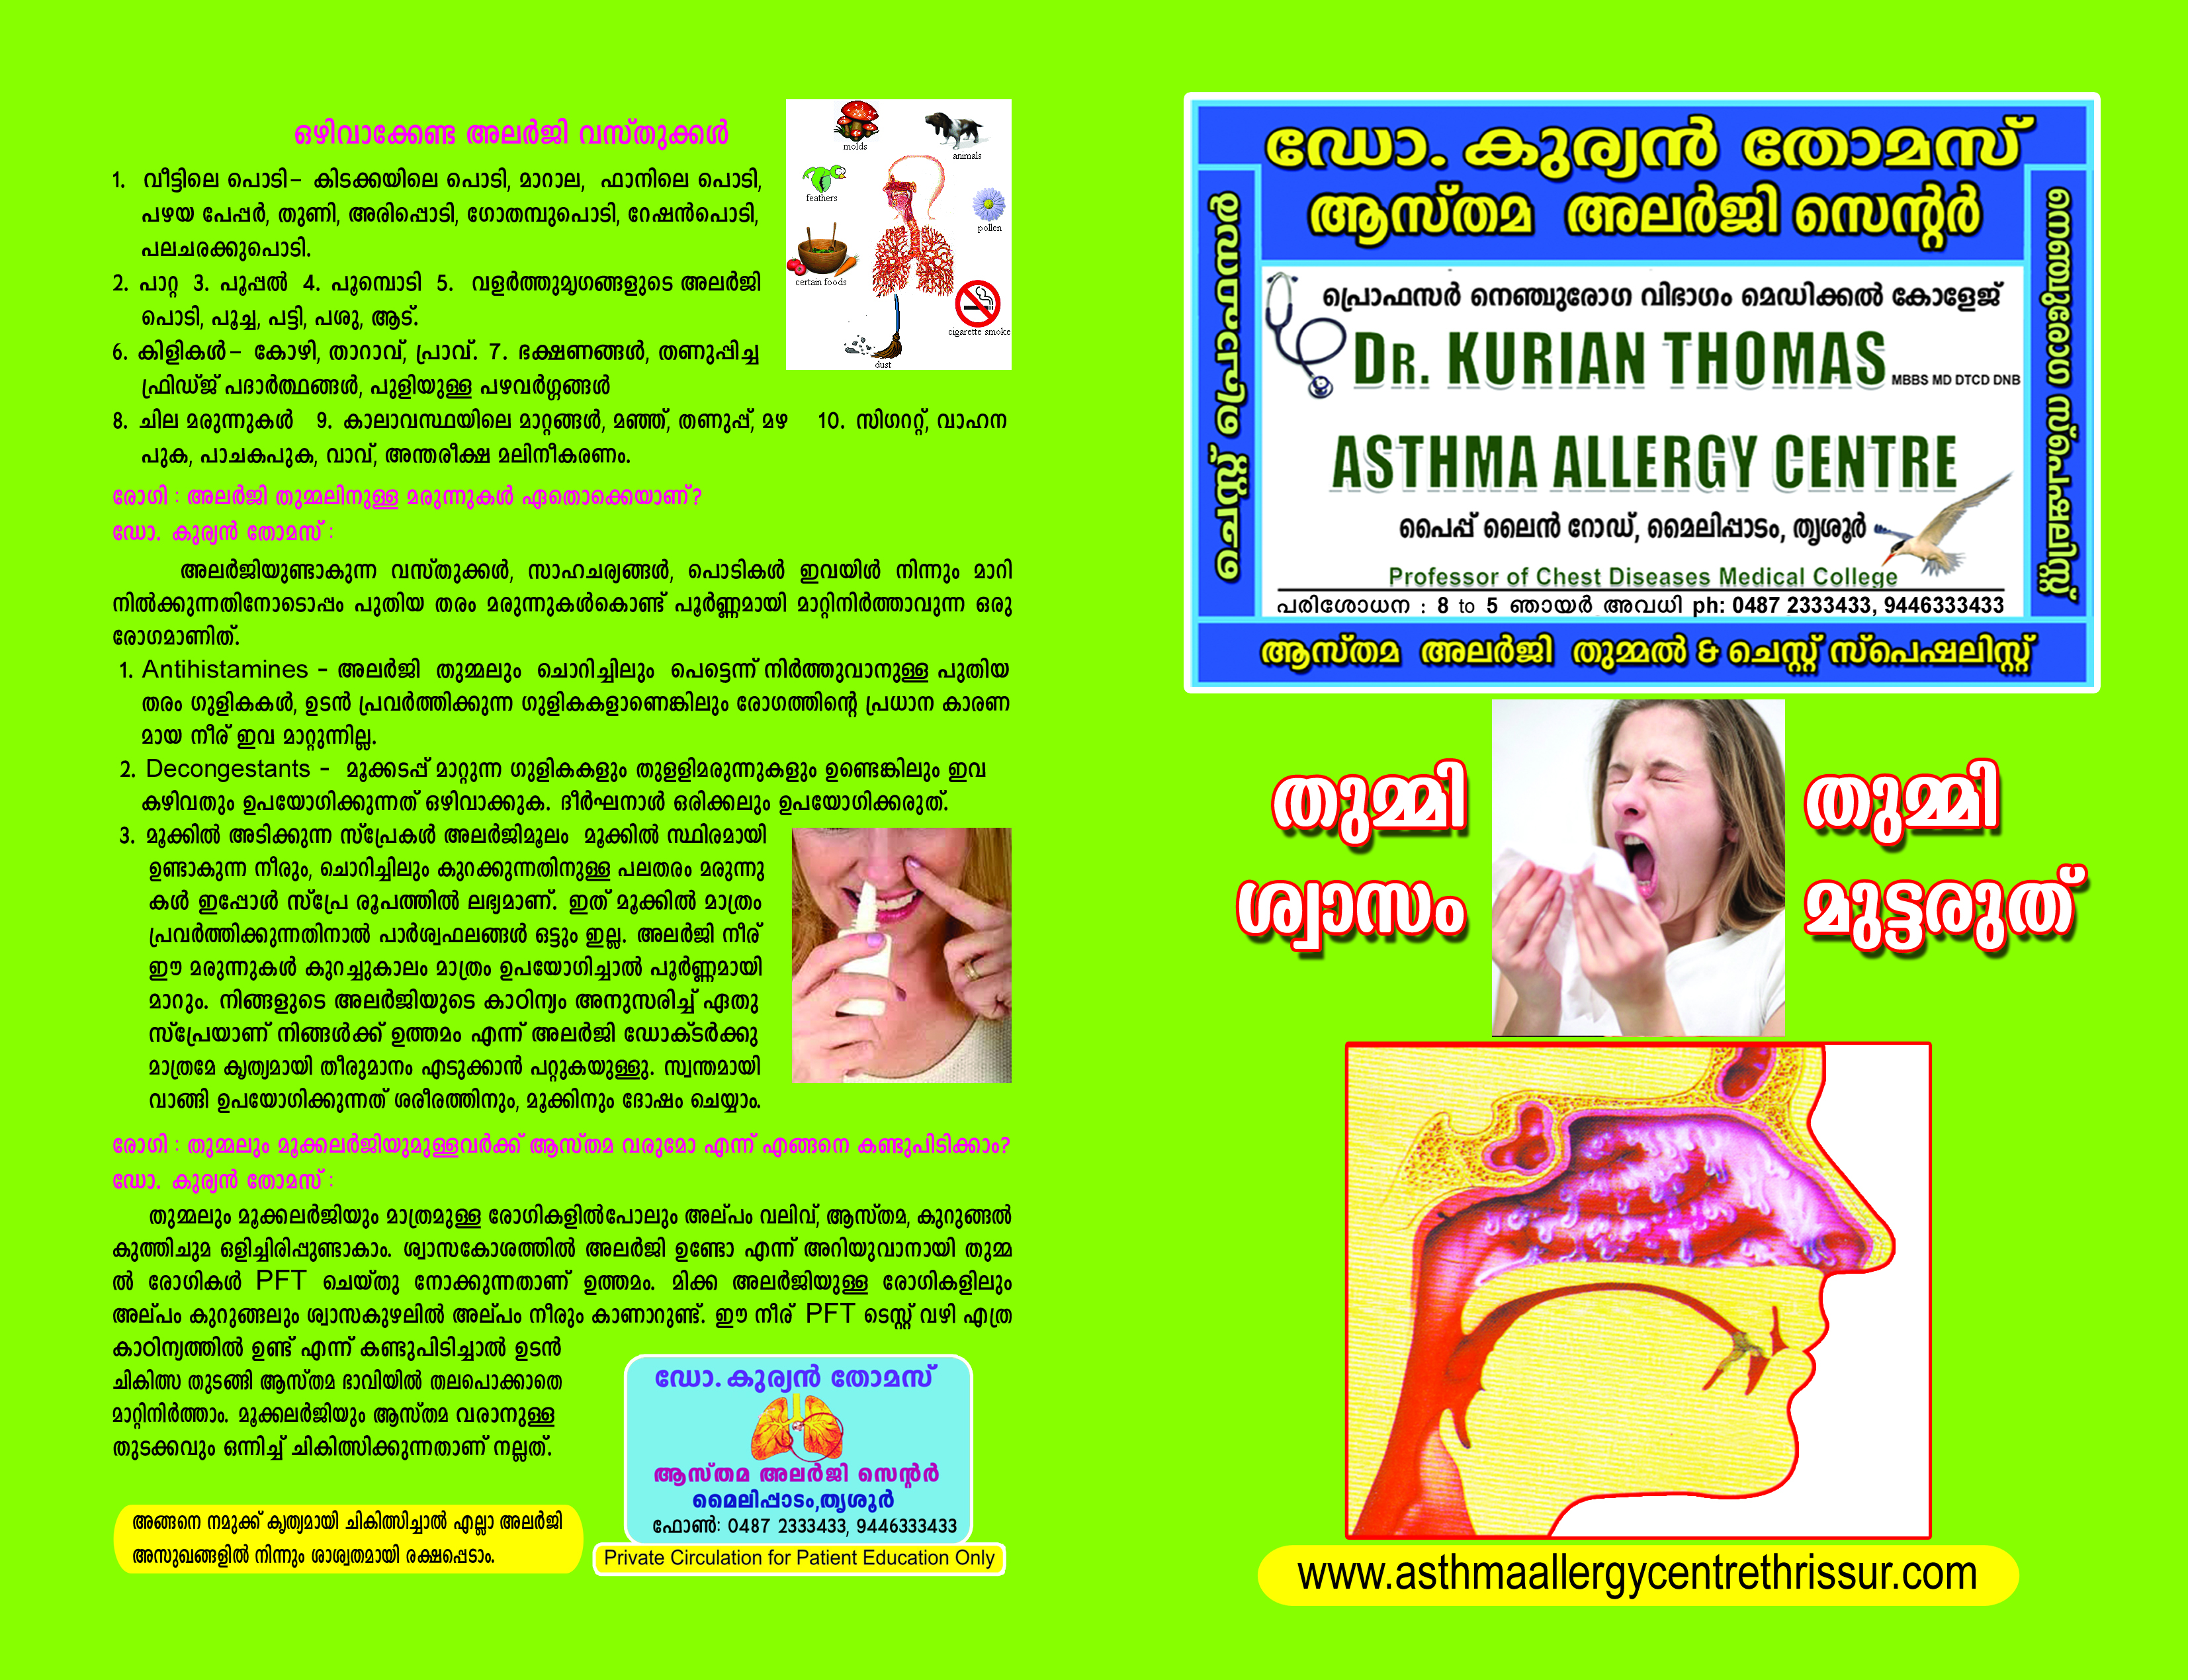 Pulmonology Asthma Allergy Cnetre thrissur .Sneezing Factsheet